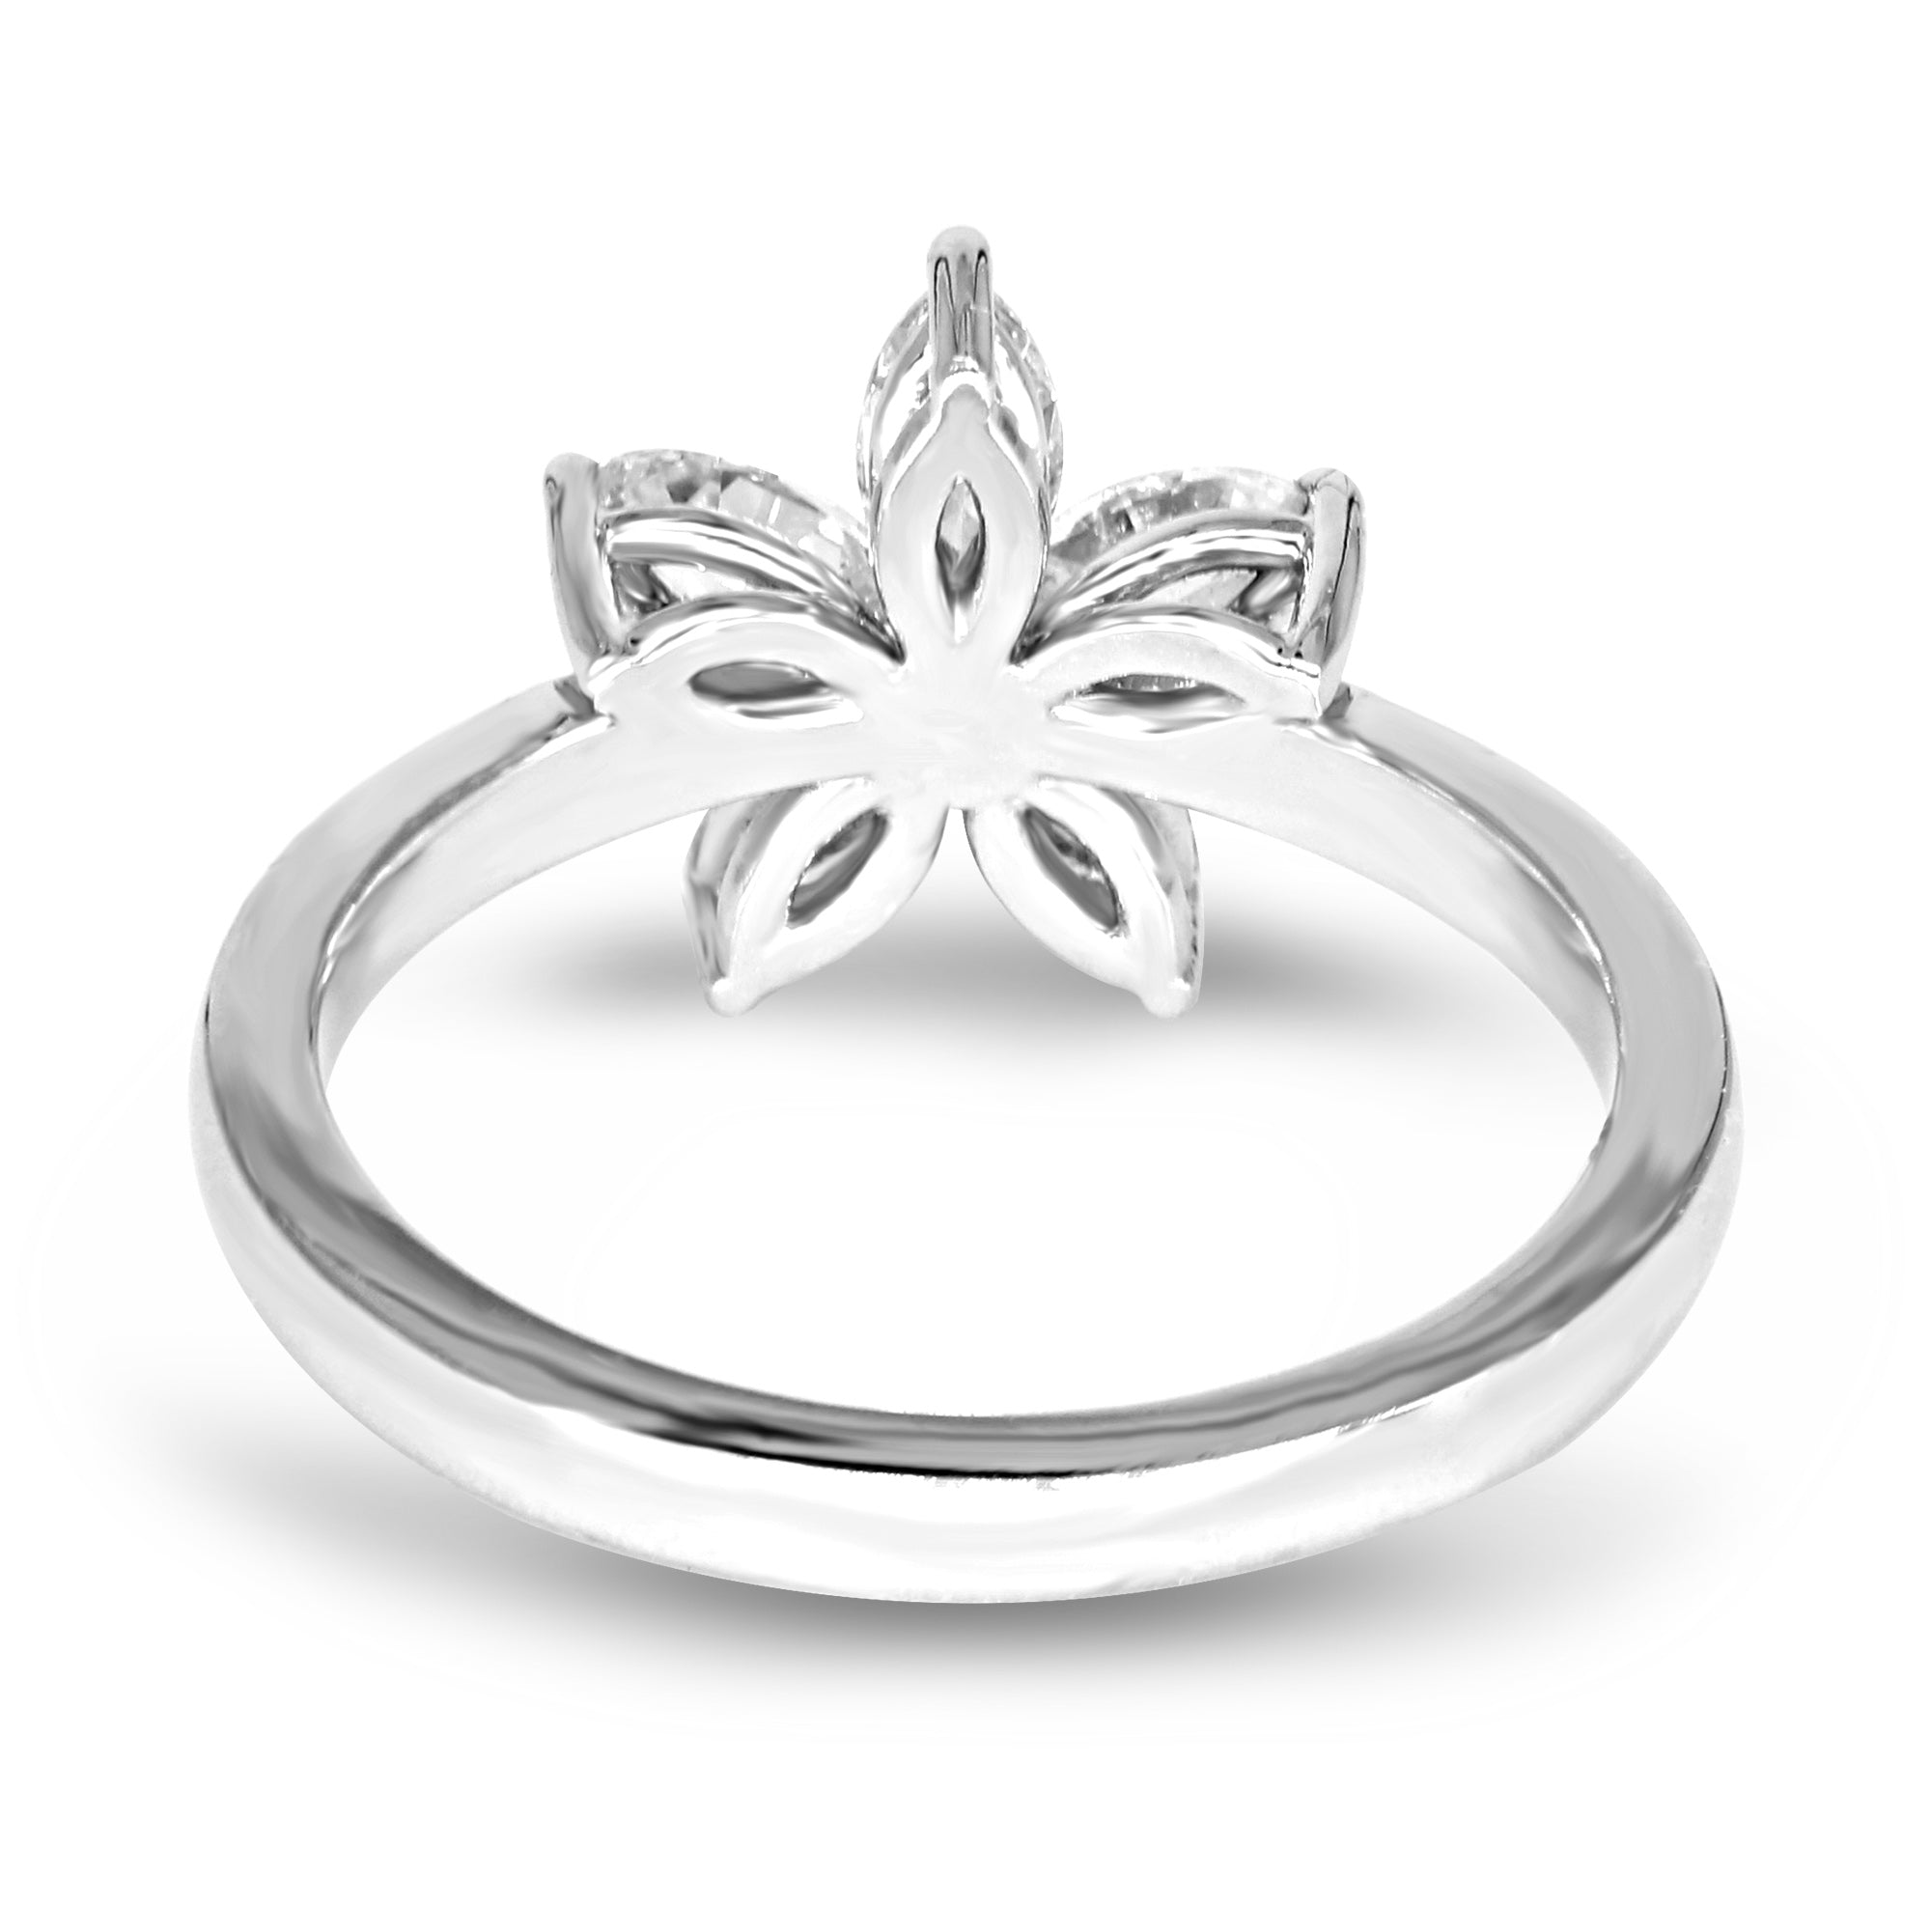 0.75 ct. Marquise Diamond Flower Ring-in 14K/18K White, Yellow, Rose Gold and Platinum - Christmas Jewelry Gift -VIRABYANI